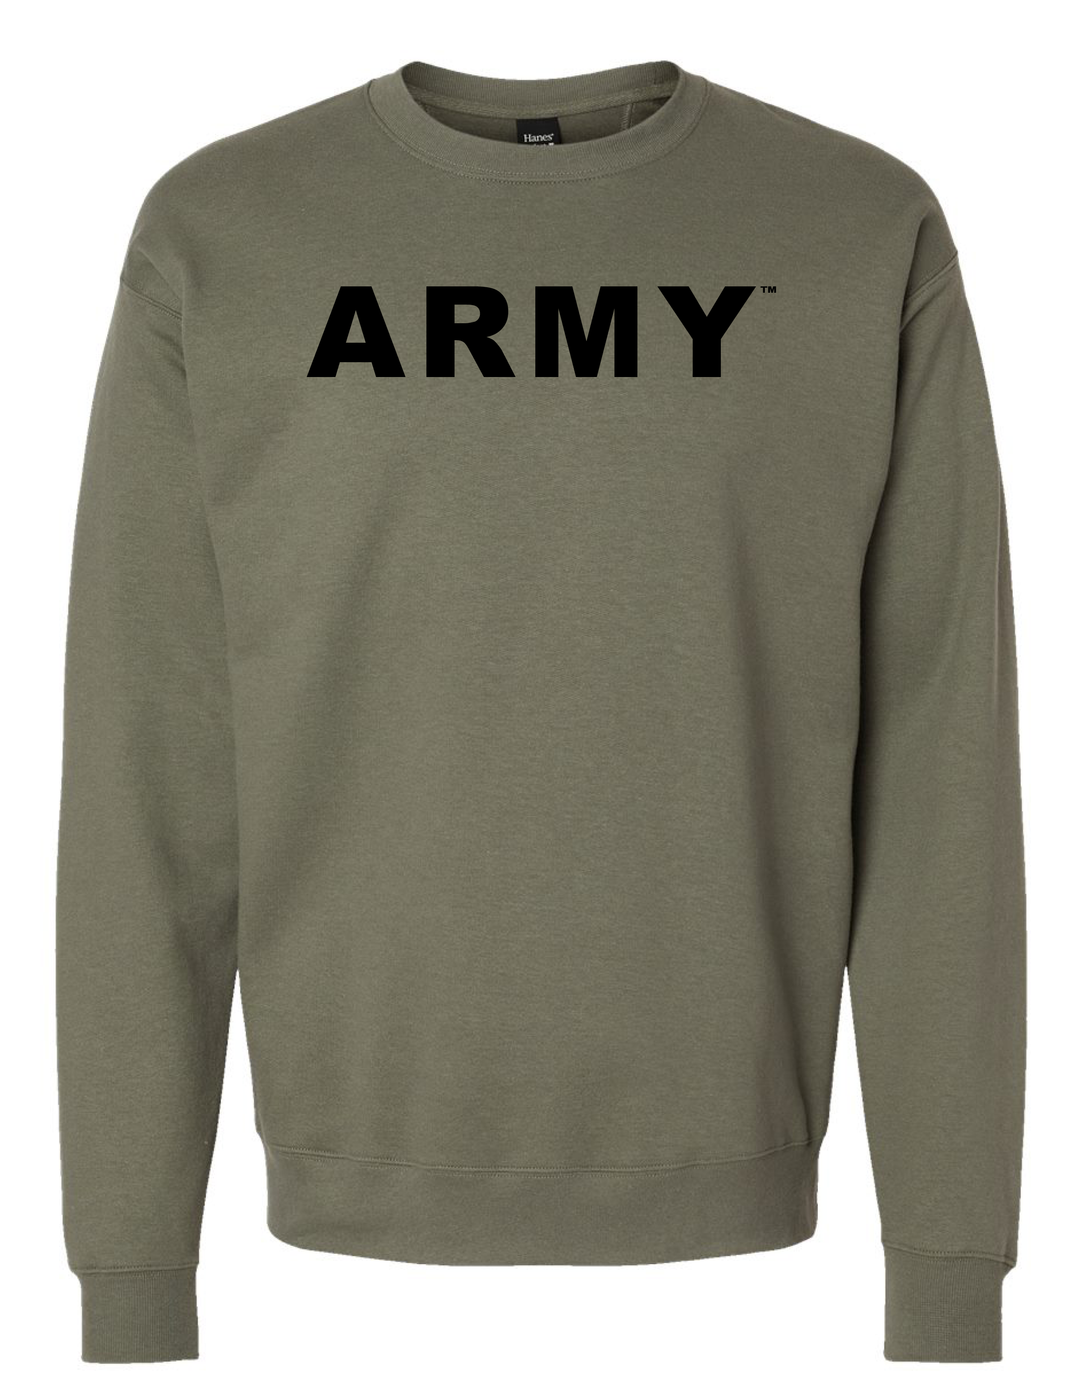 Army™ Sweatshirt (Military Green)